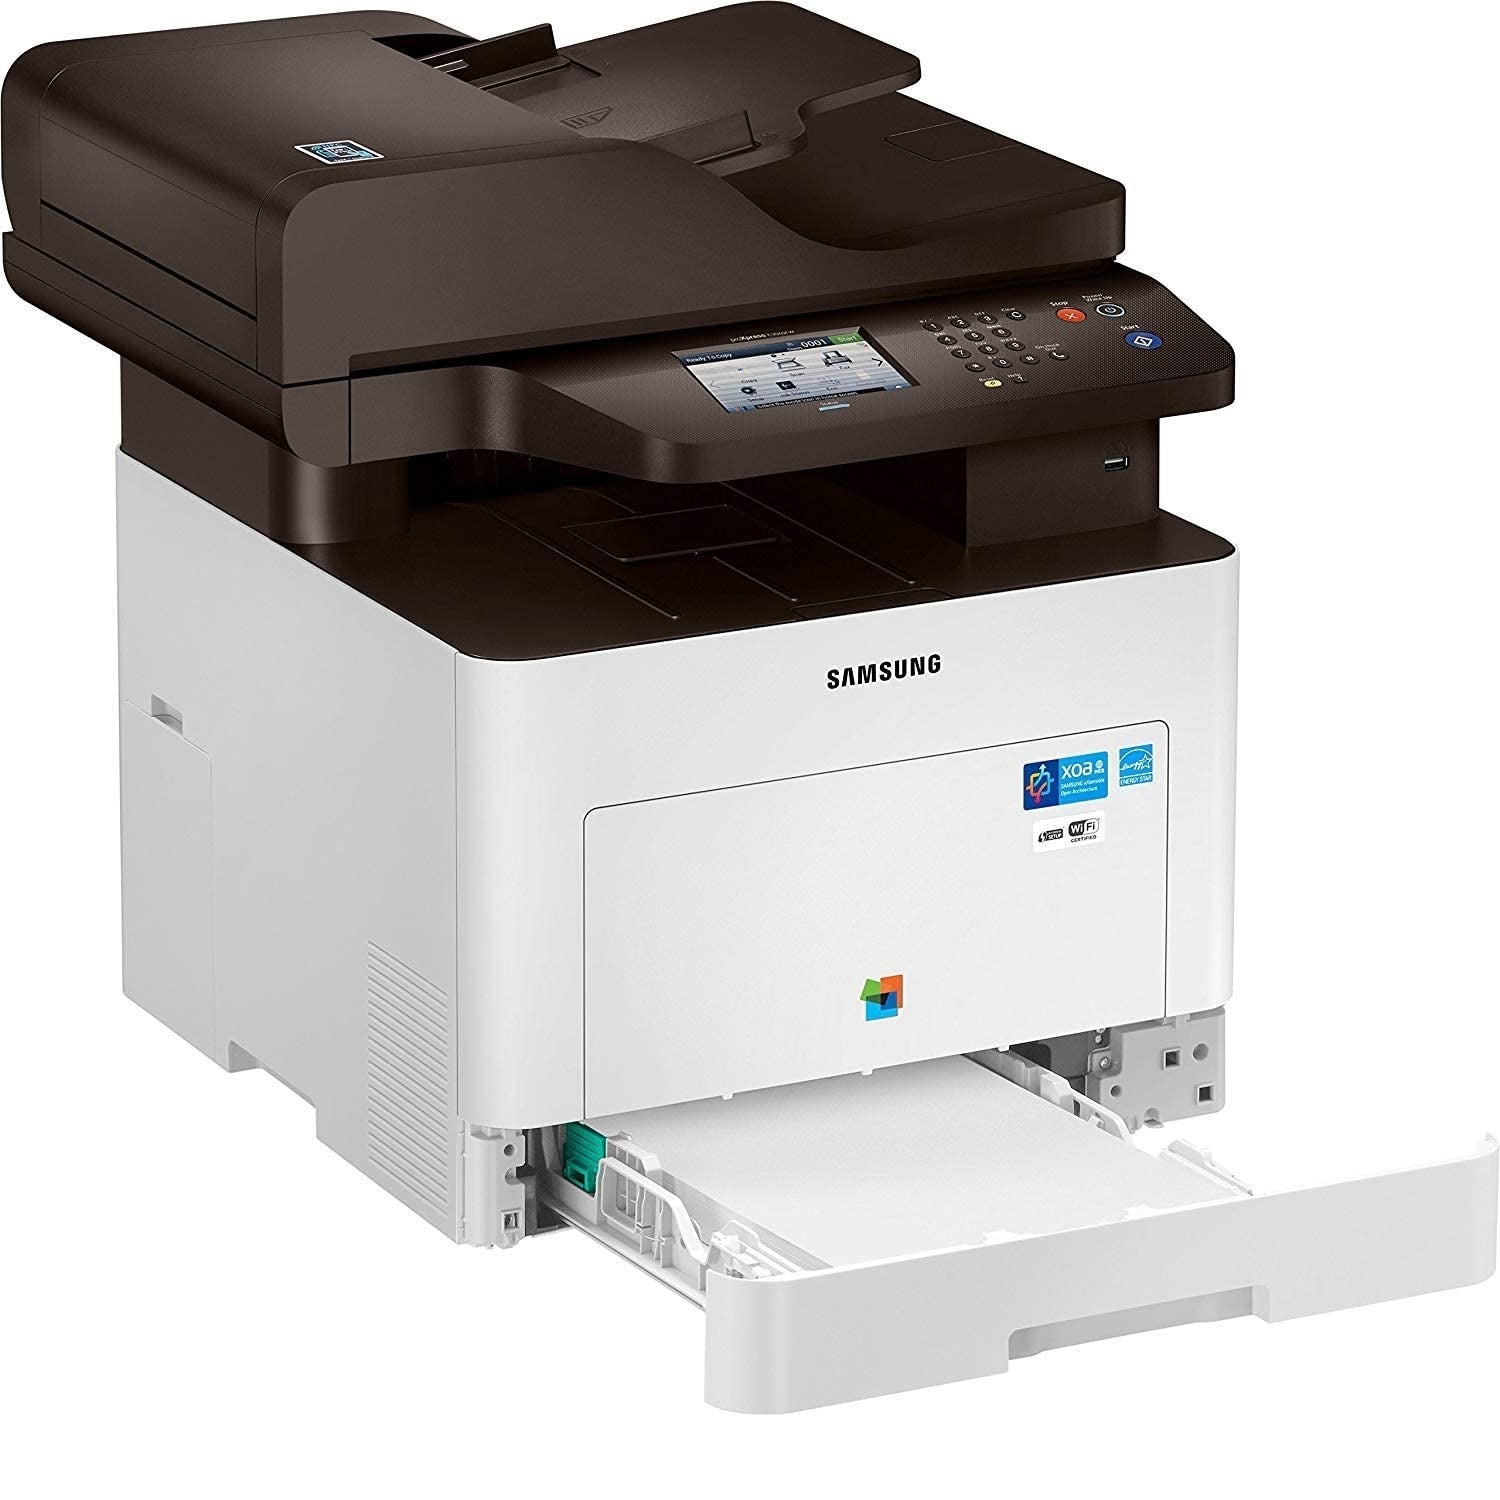 SAMSUNG ProXpress Multifunctional Color Printer,